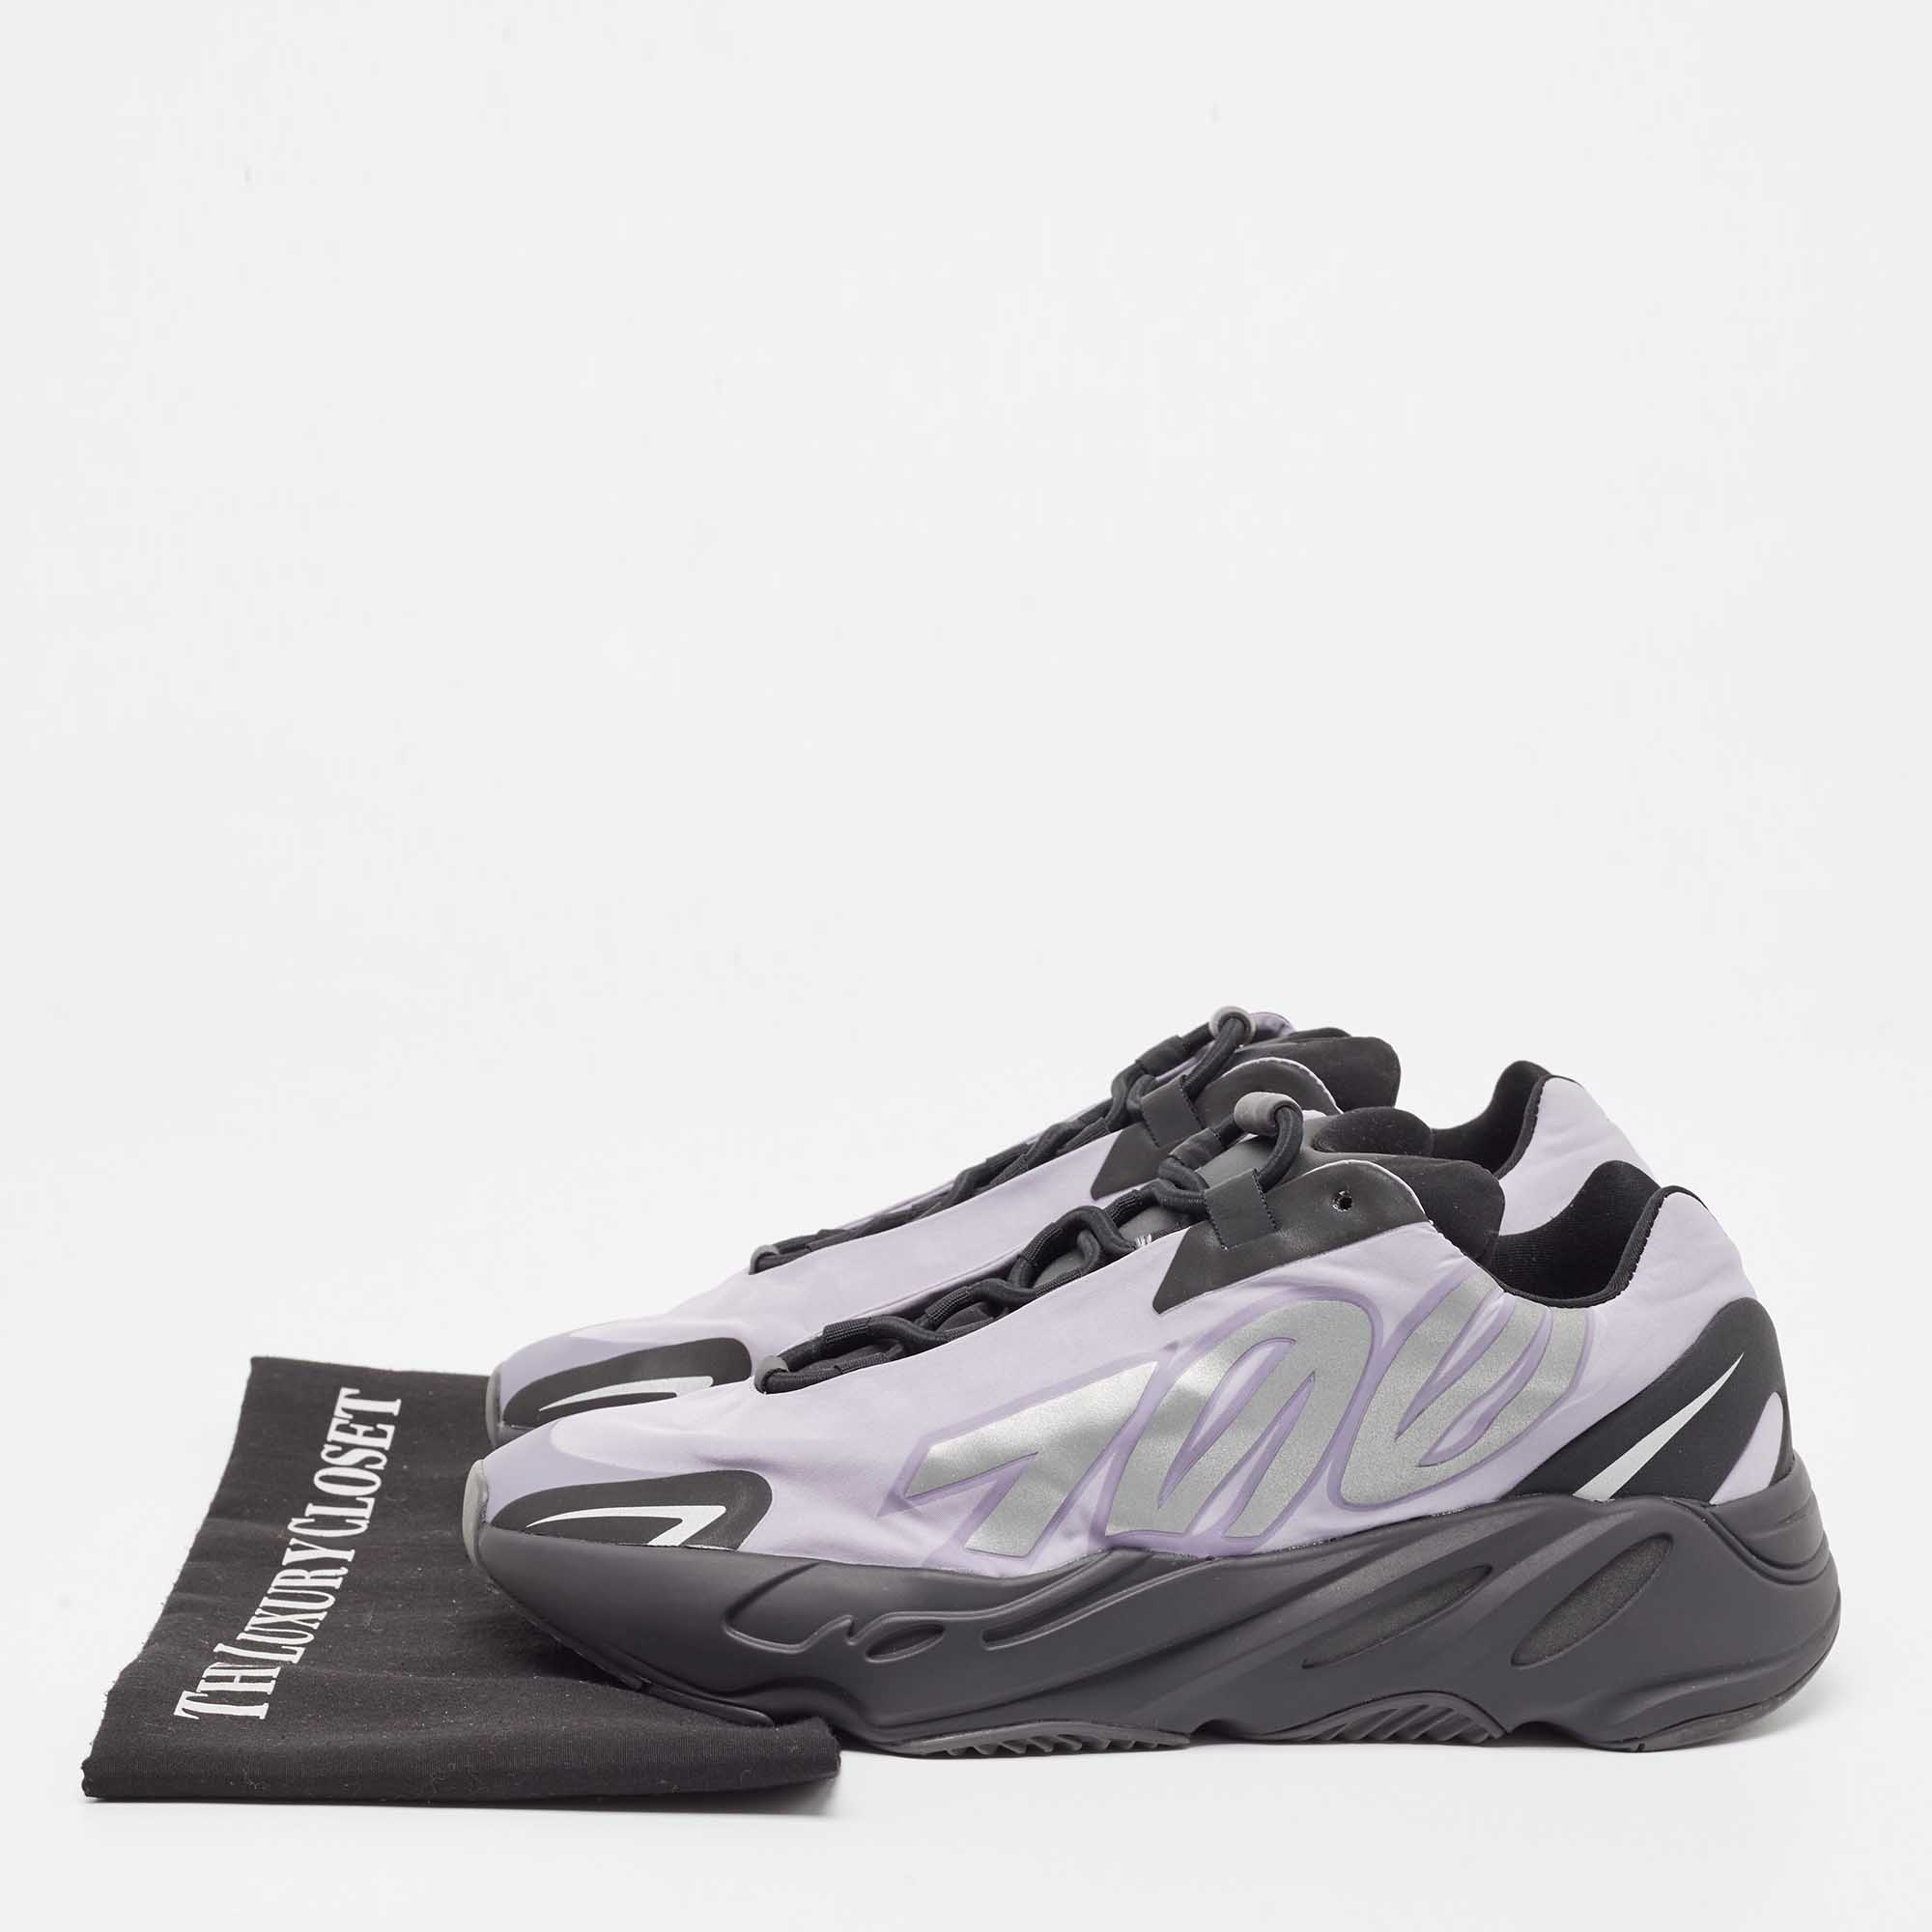 Yeezy X Adidas Black/Lavender Nylon Boost 700 MNVN Geode Sneakers Size 43.5